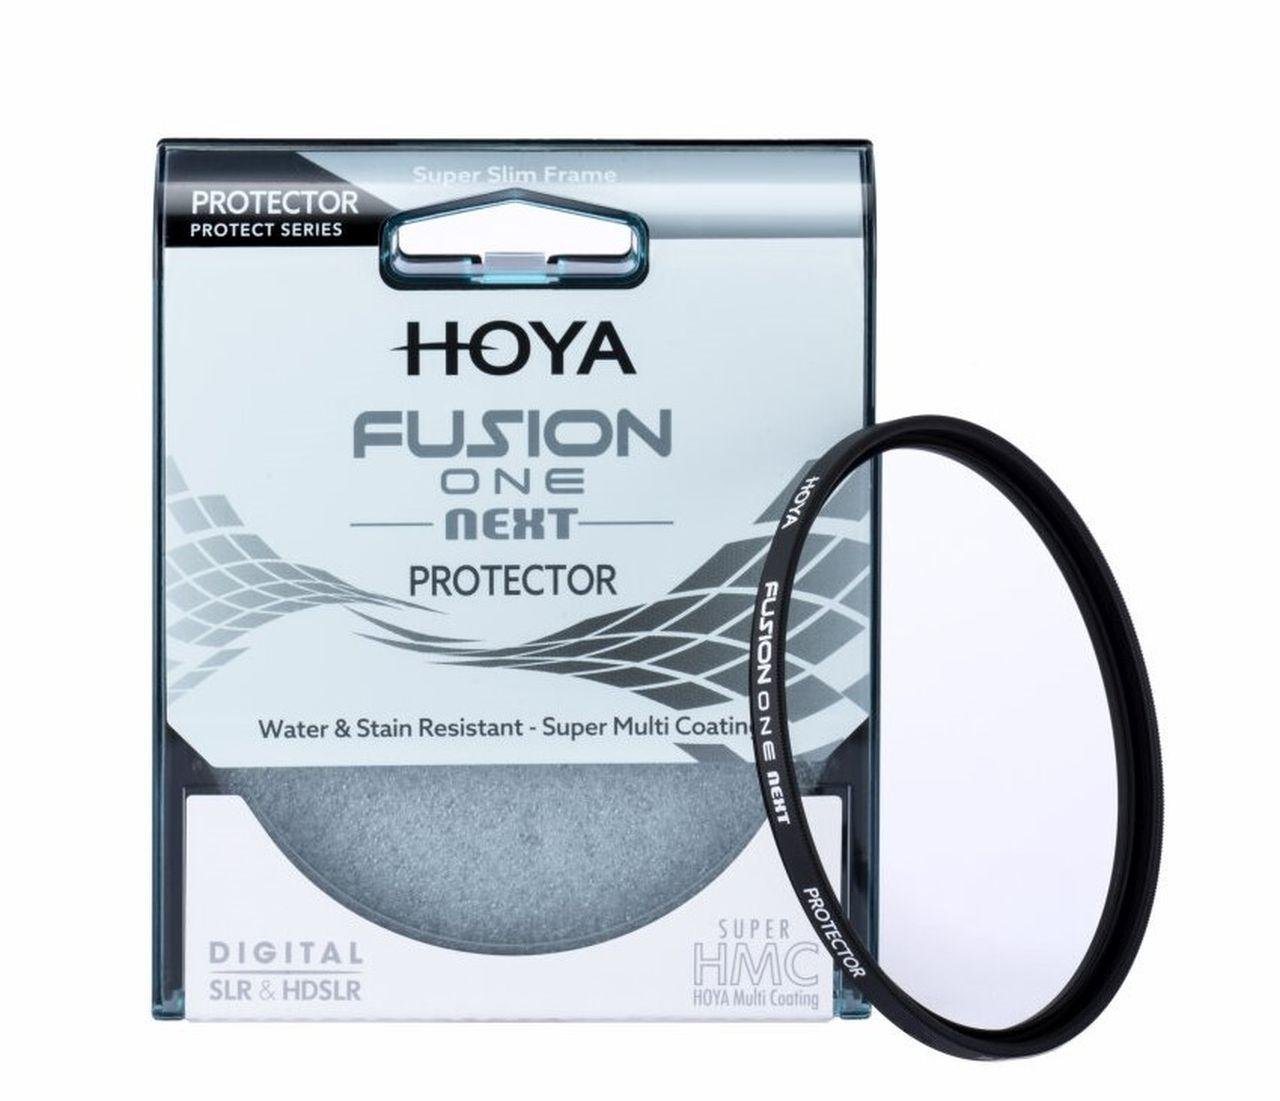 Hoya Fusion ONE Next Protector 55mm Objektivzubehör von Hoya